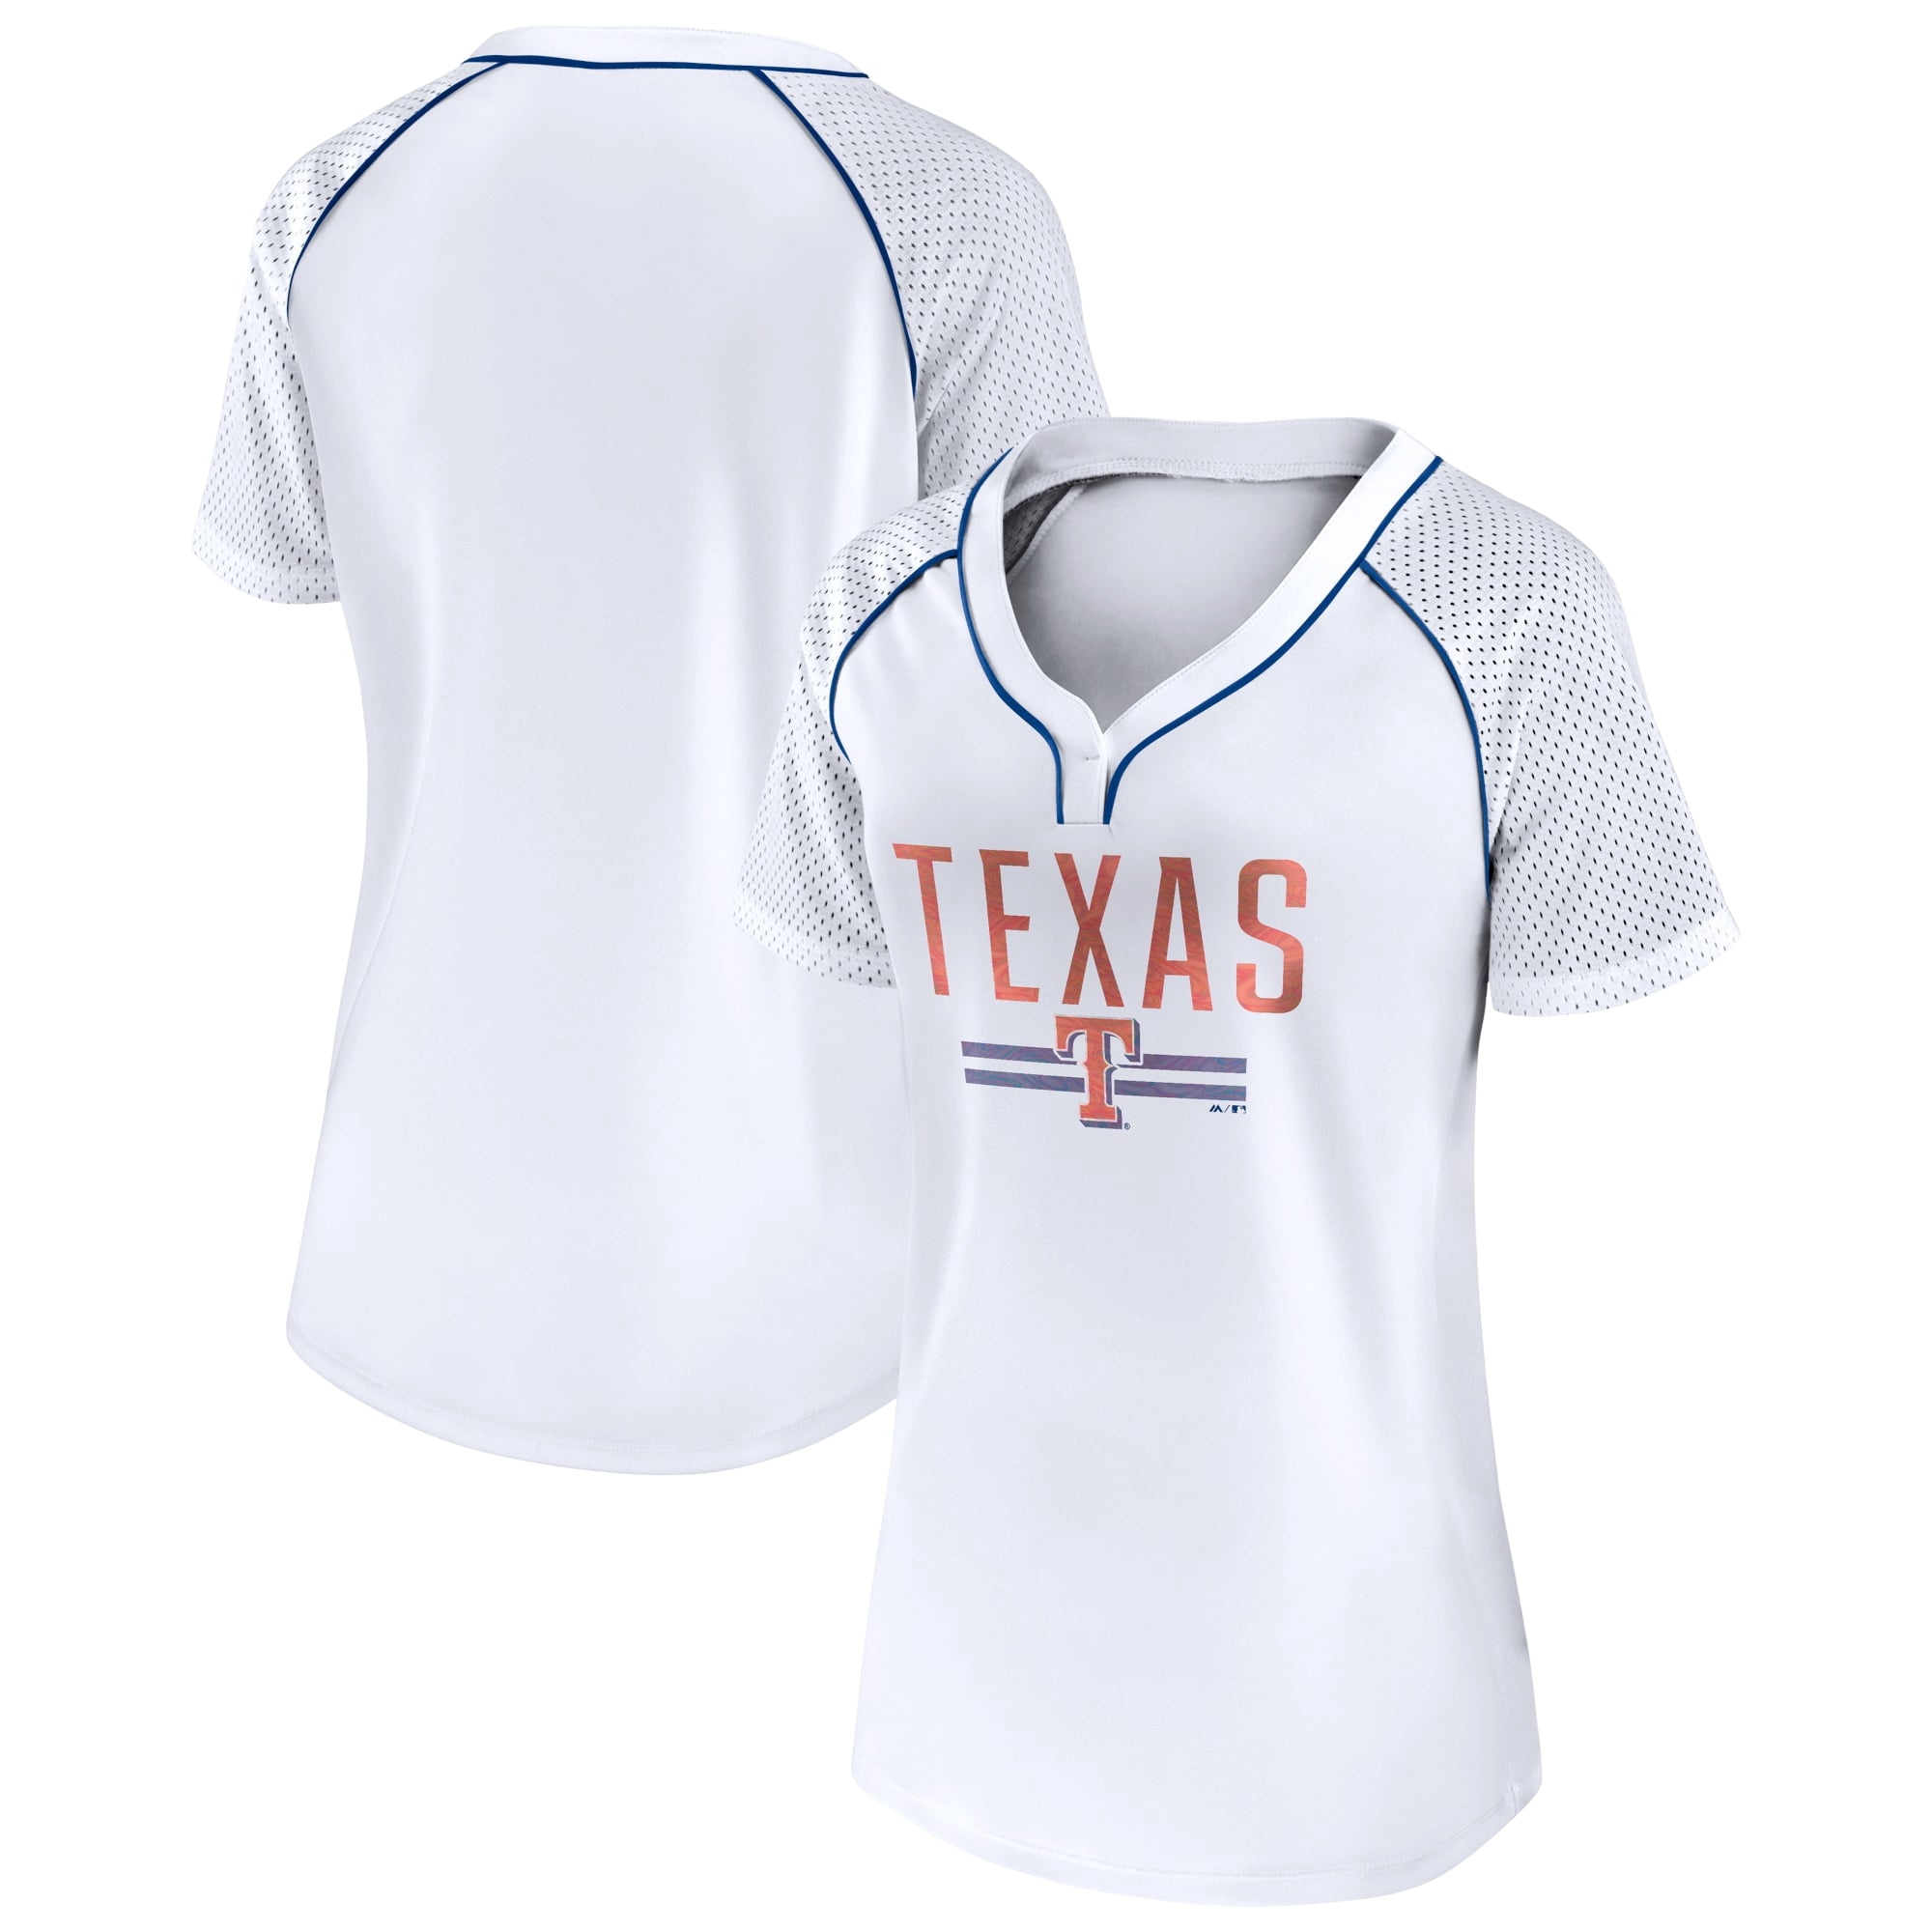 Women's Fanatics Branded White Texas Rangers Play Calling Raglan V-Neck  T-Shirt